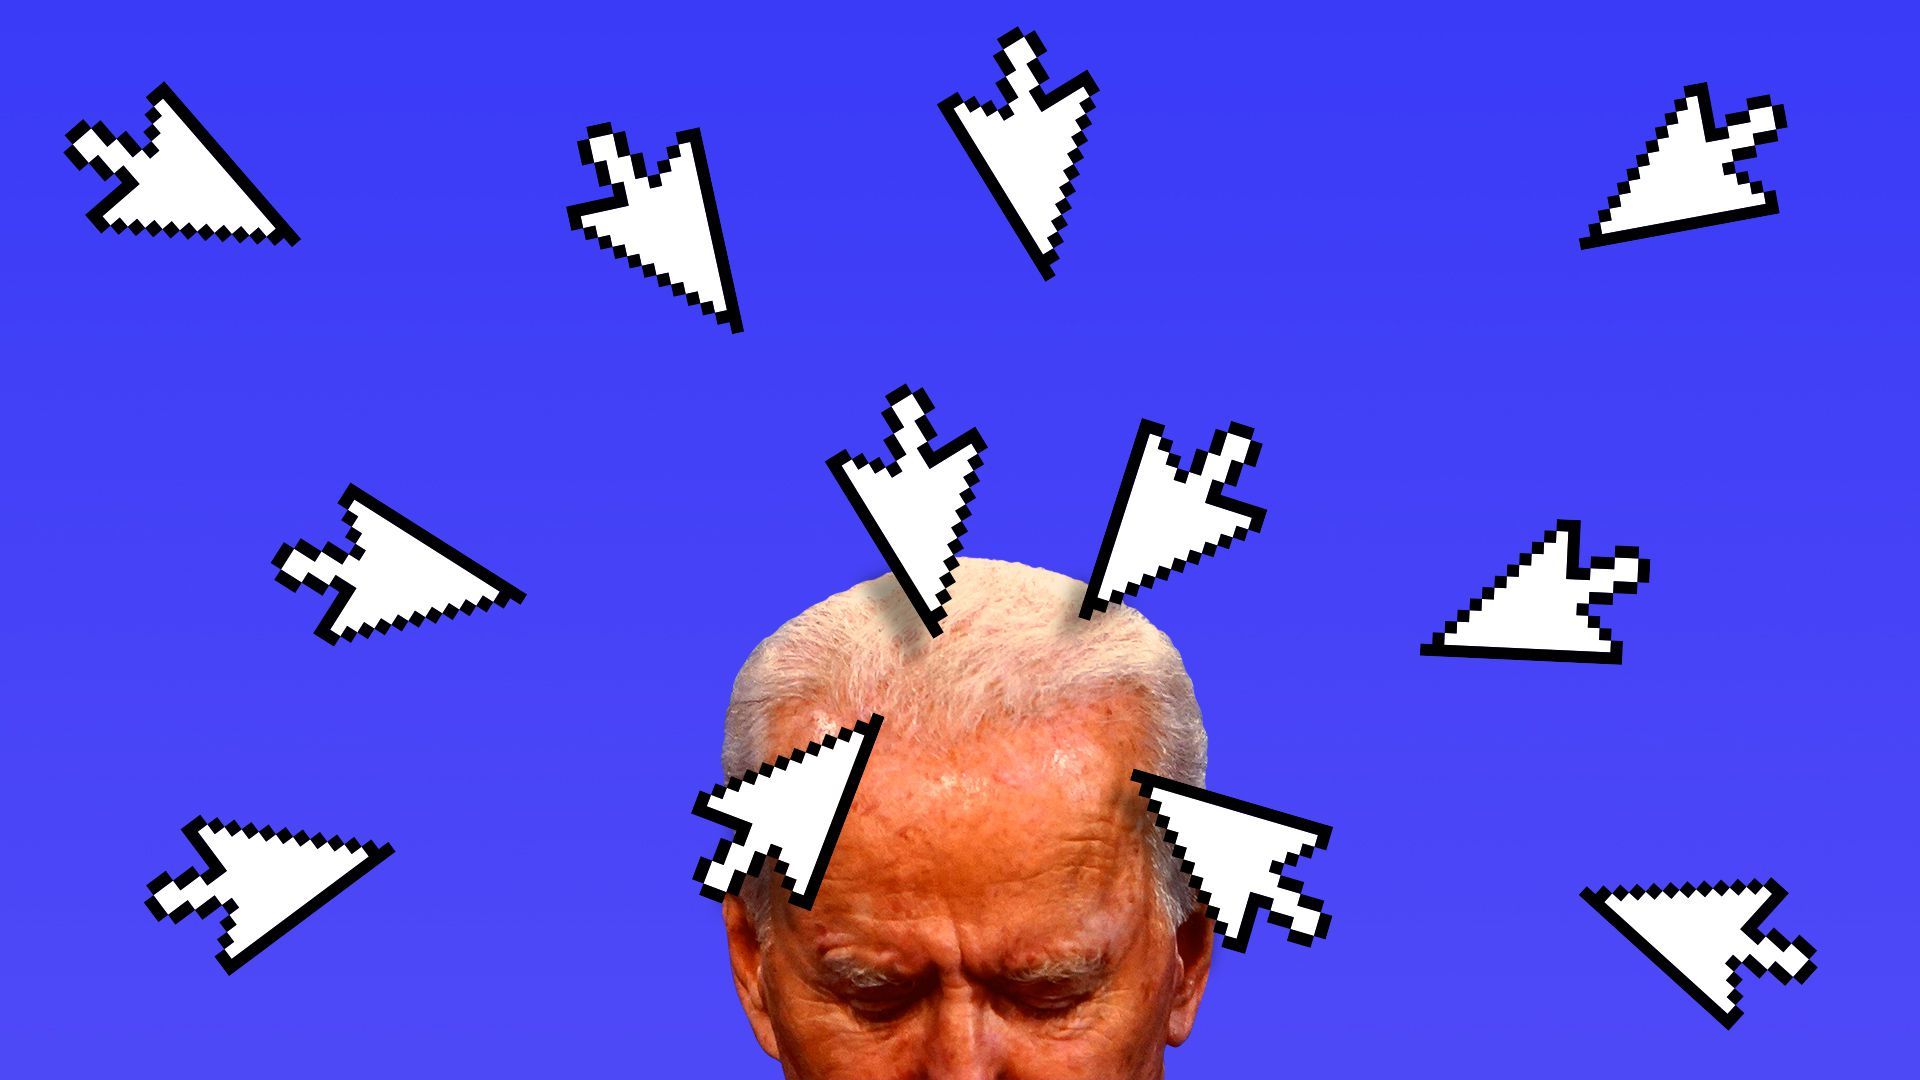 Photo illustration of Joe Biden surrounded by cursors.